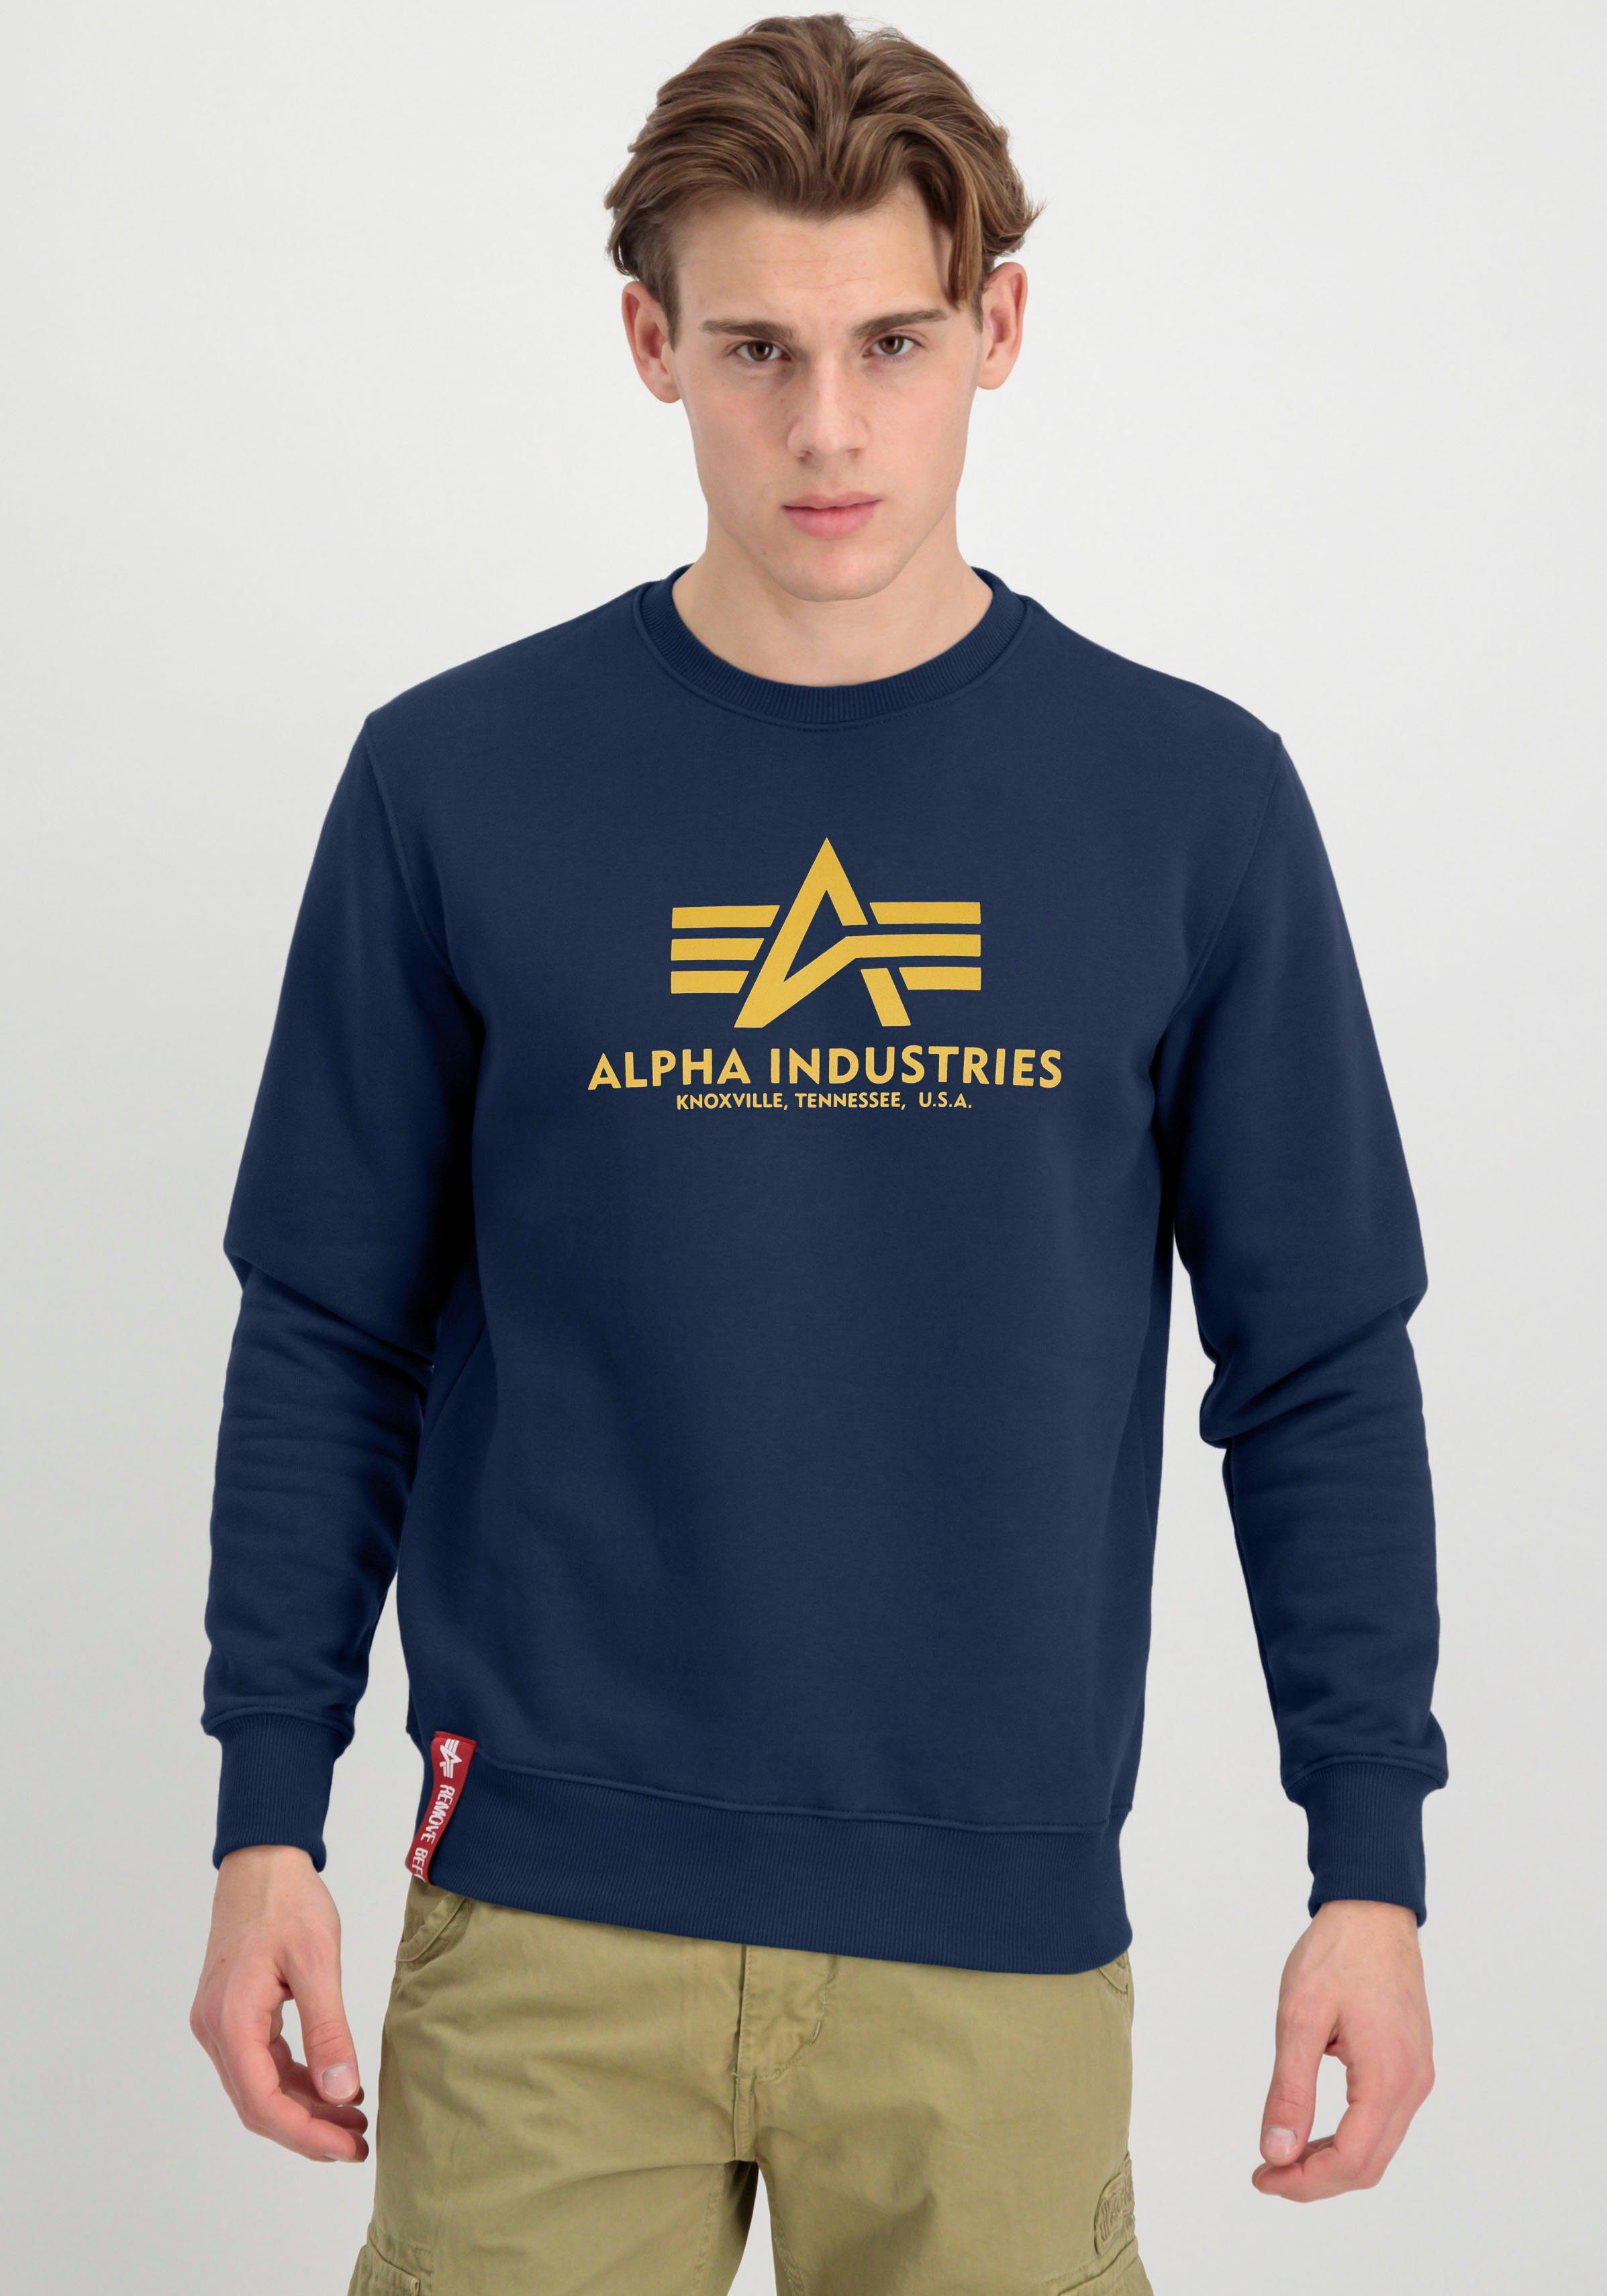 Alpha Industries Sweatshirt Basic navy new Sweater